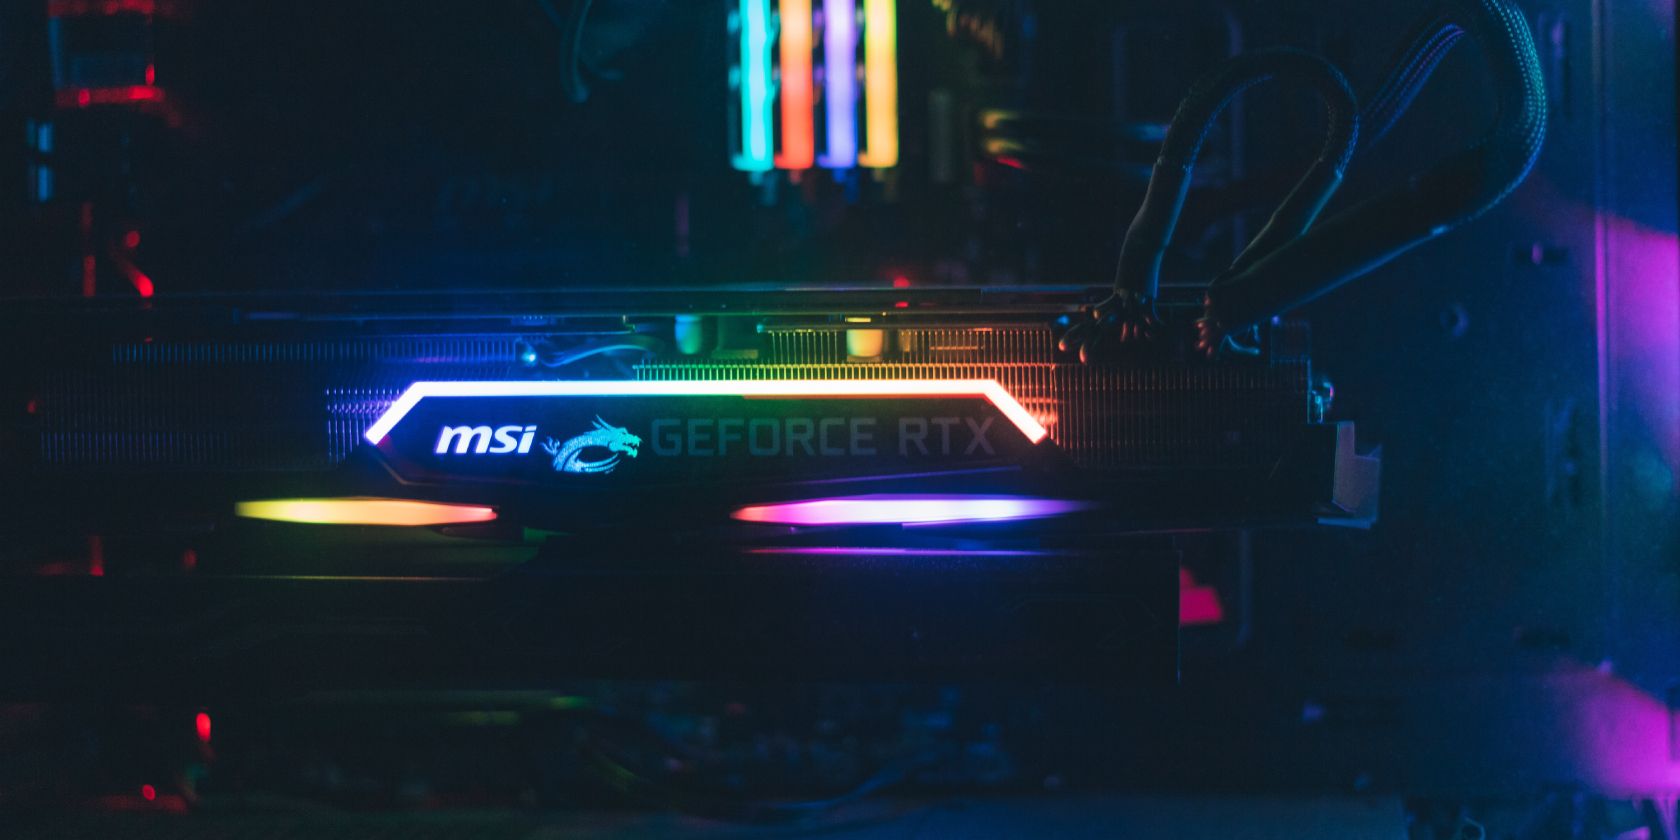 MSI GeForce RTX GPU installed in a PC